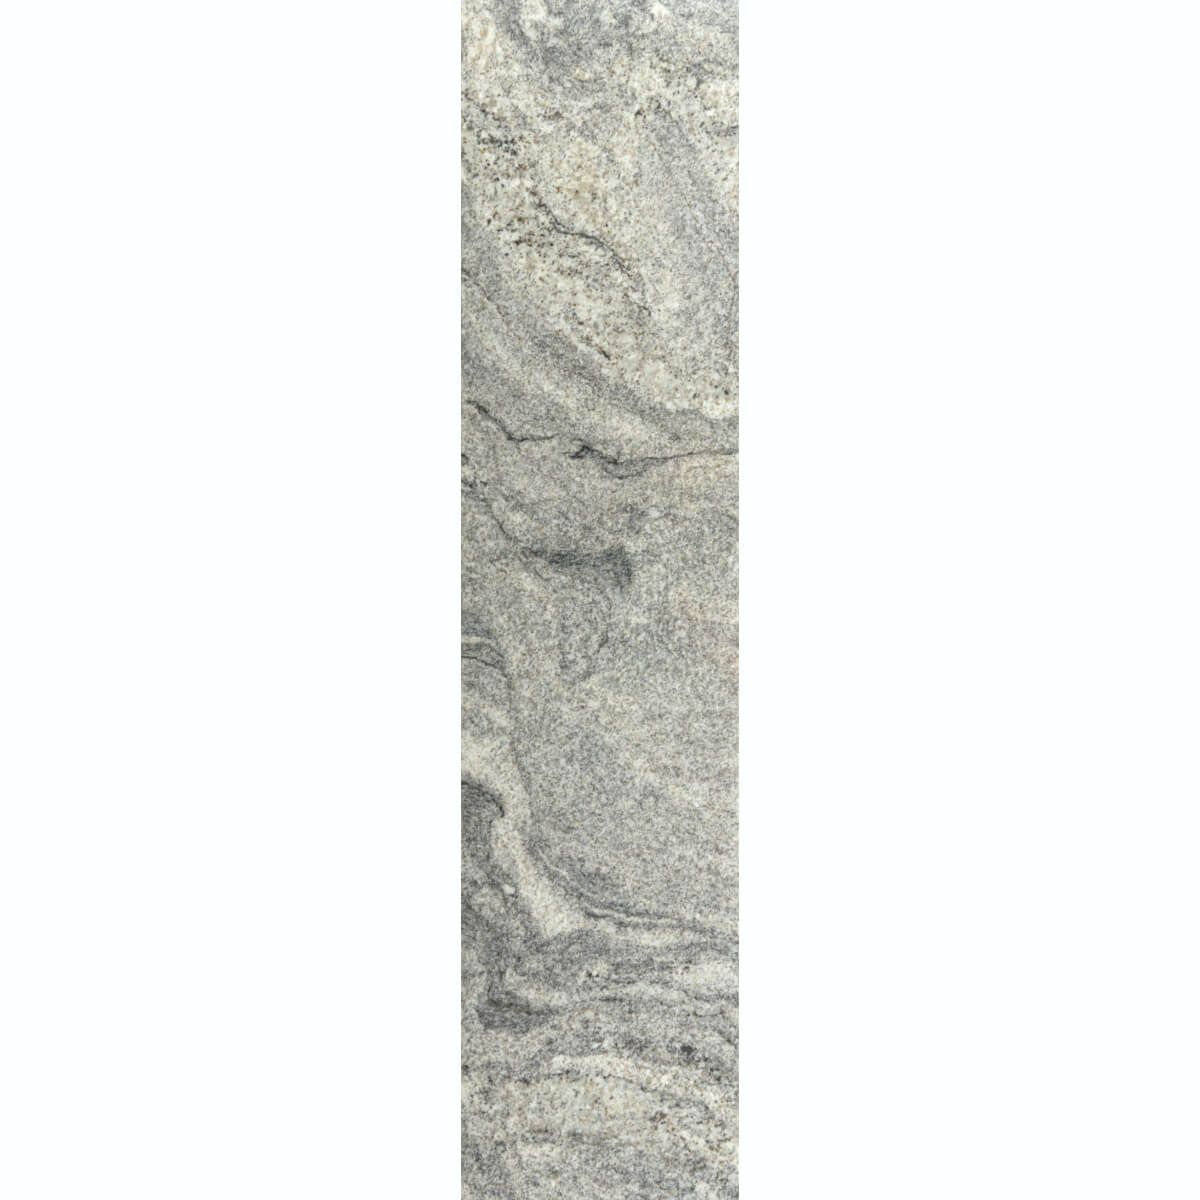 Stopień granitowy Royal Juparana polerowany 150x33x3 cm